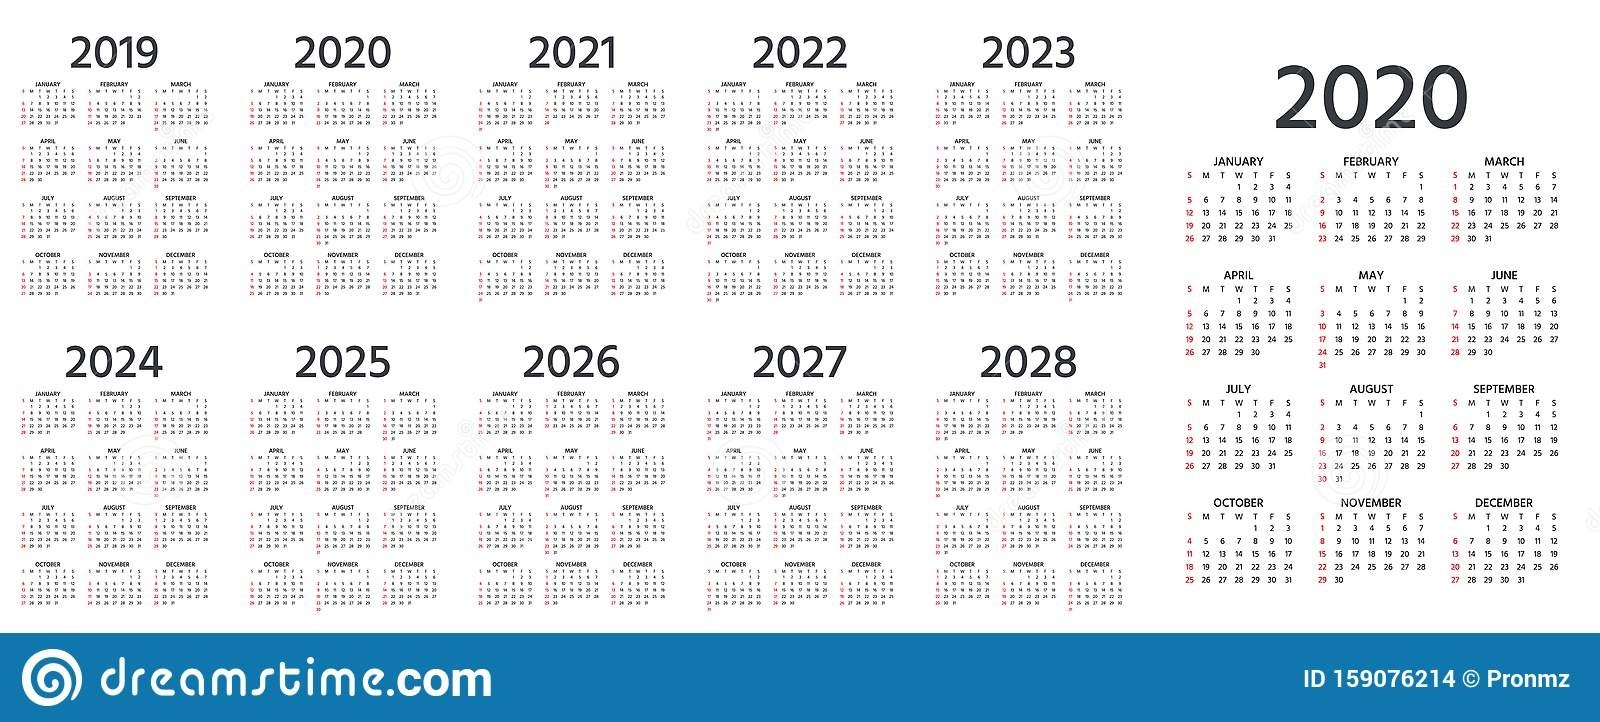 2 Year Pocket Calendar 2020 2021 | Calendar Printable Free-Printable Pocket Calendars 2021